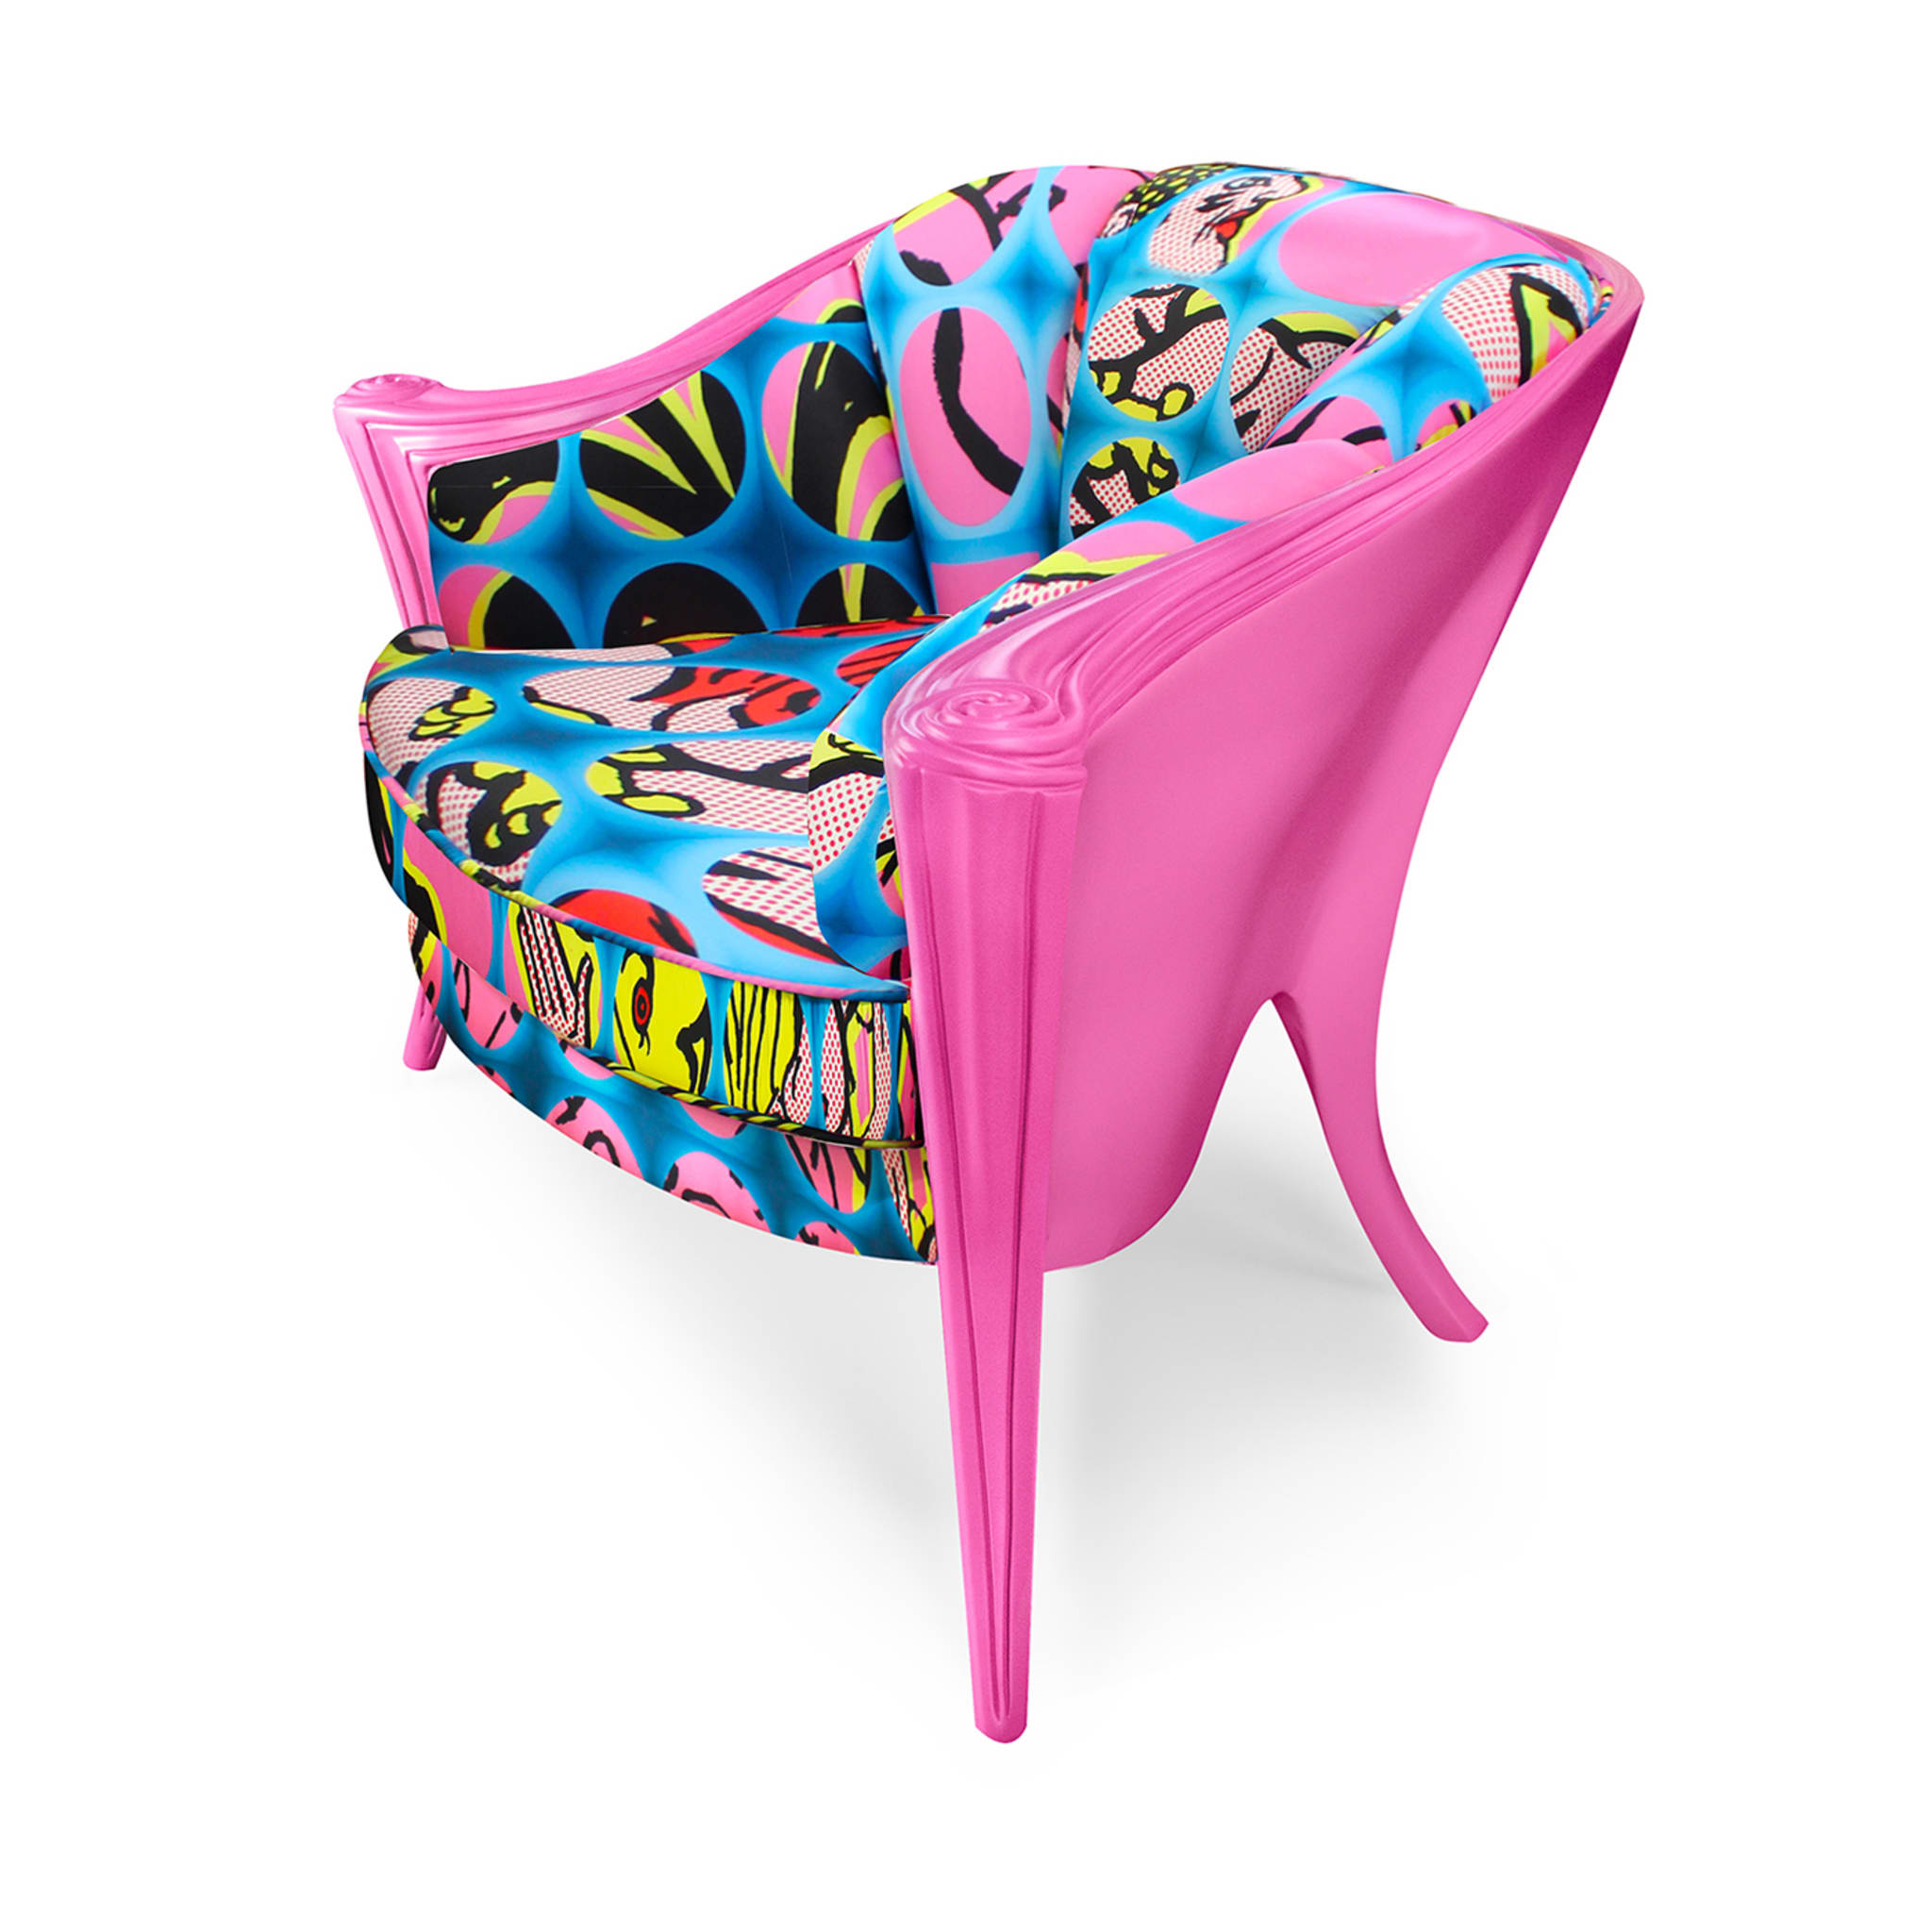 Opus Futura Pink Artestoria armchair By Carlo Rampazzi - Alternative view 1